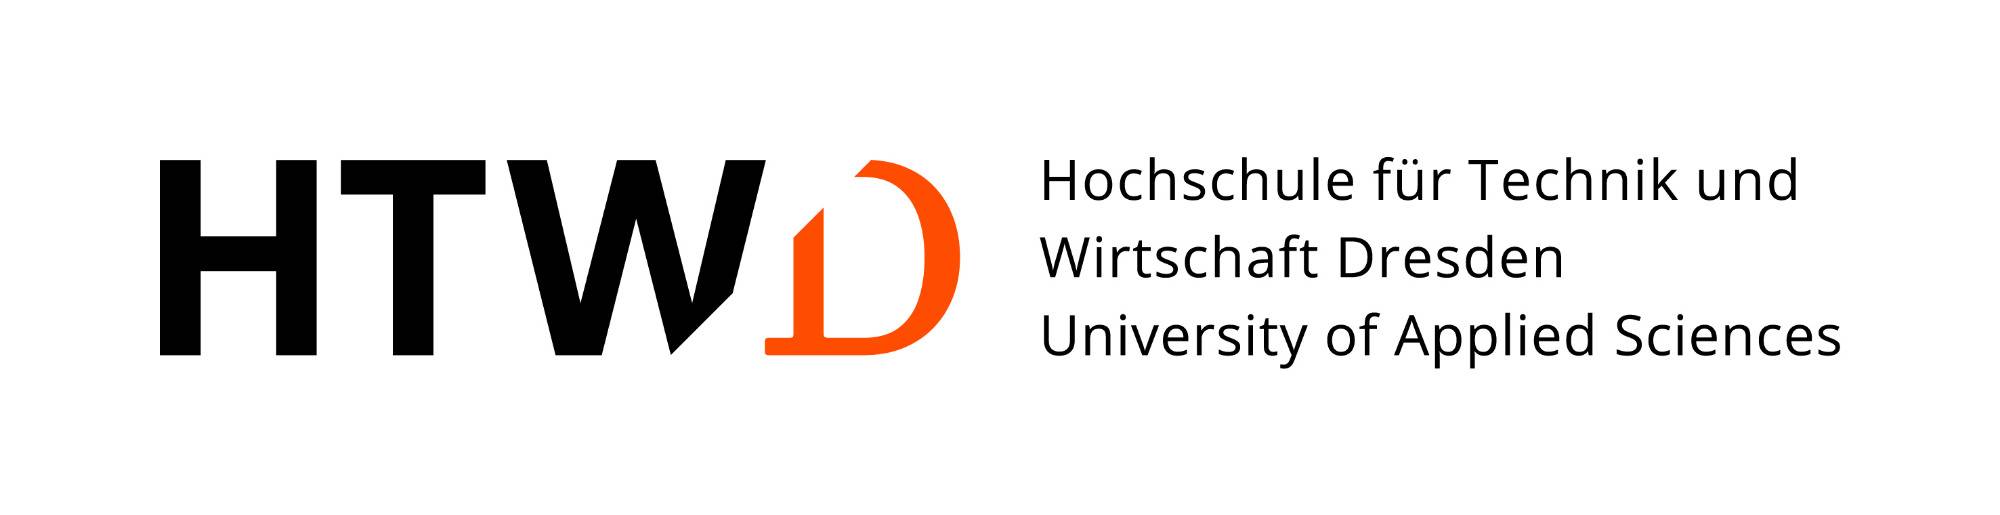 HTWD-logo-CMYK-horizontal-color.jpg